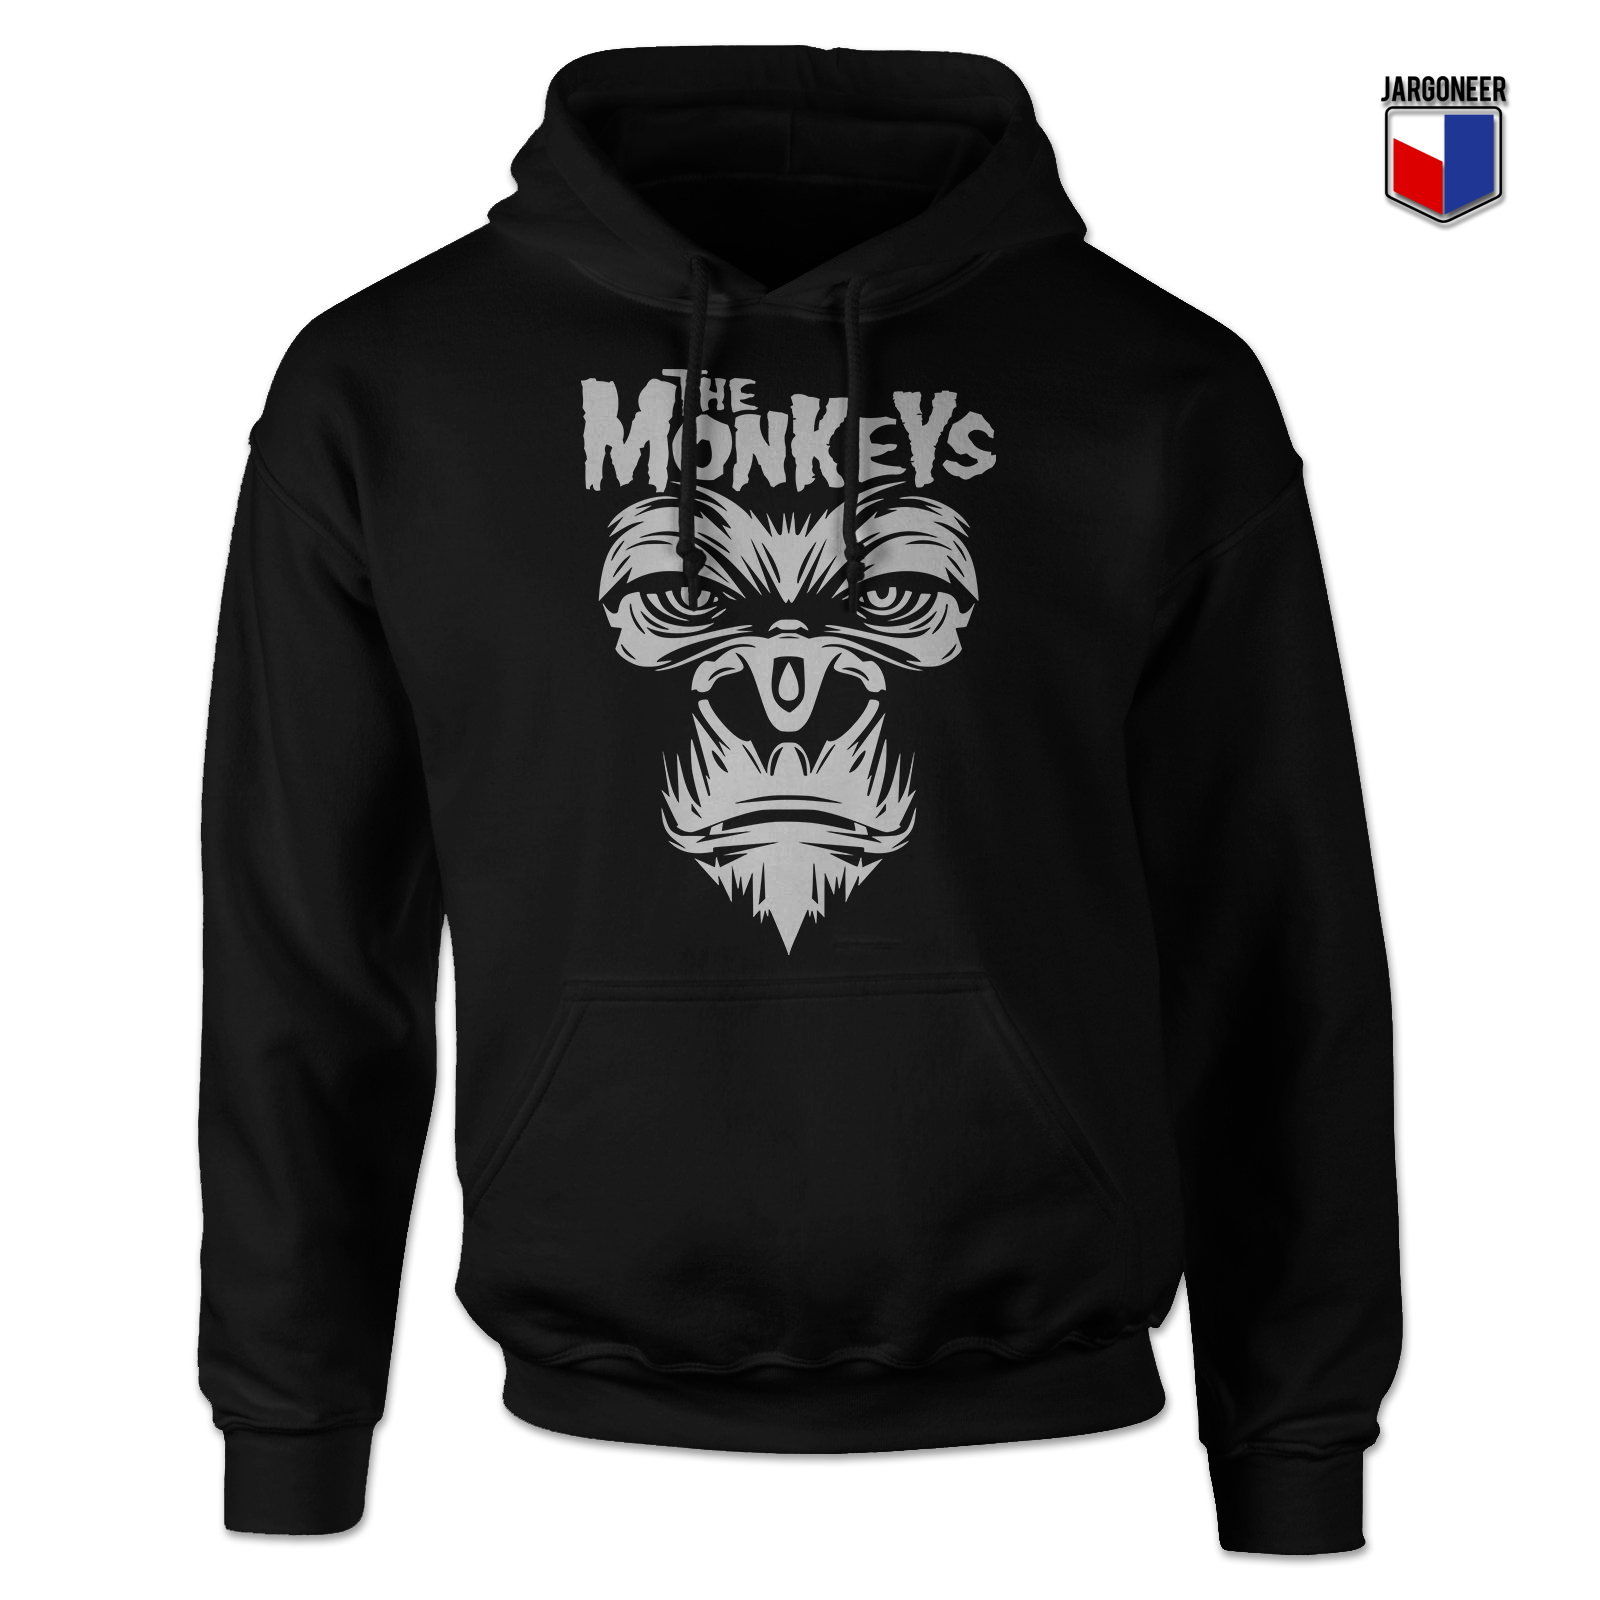 The Monkeys Black Hoody - Shop Unique Graphic Cool Shirt Designs